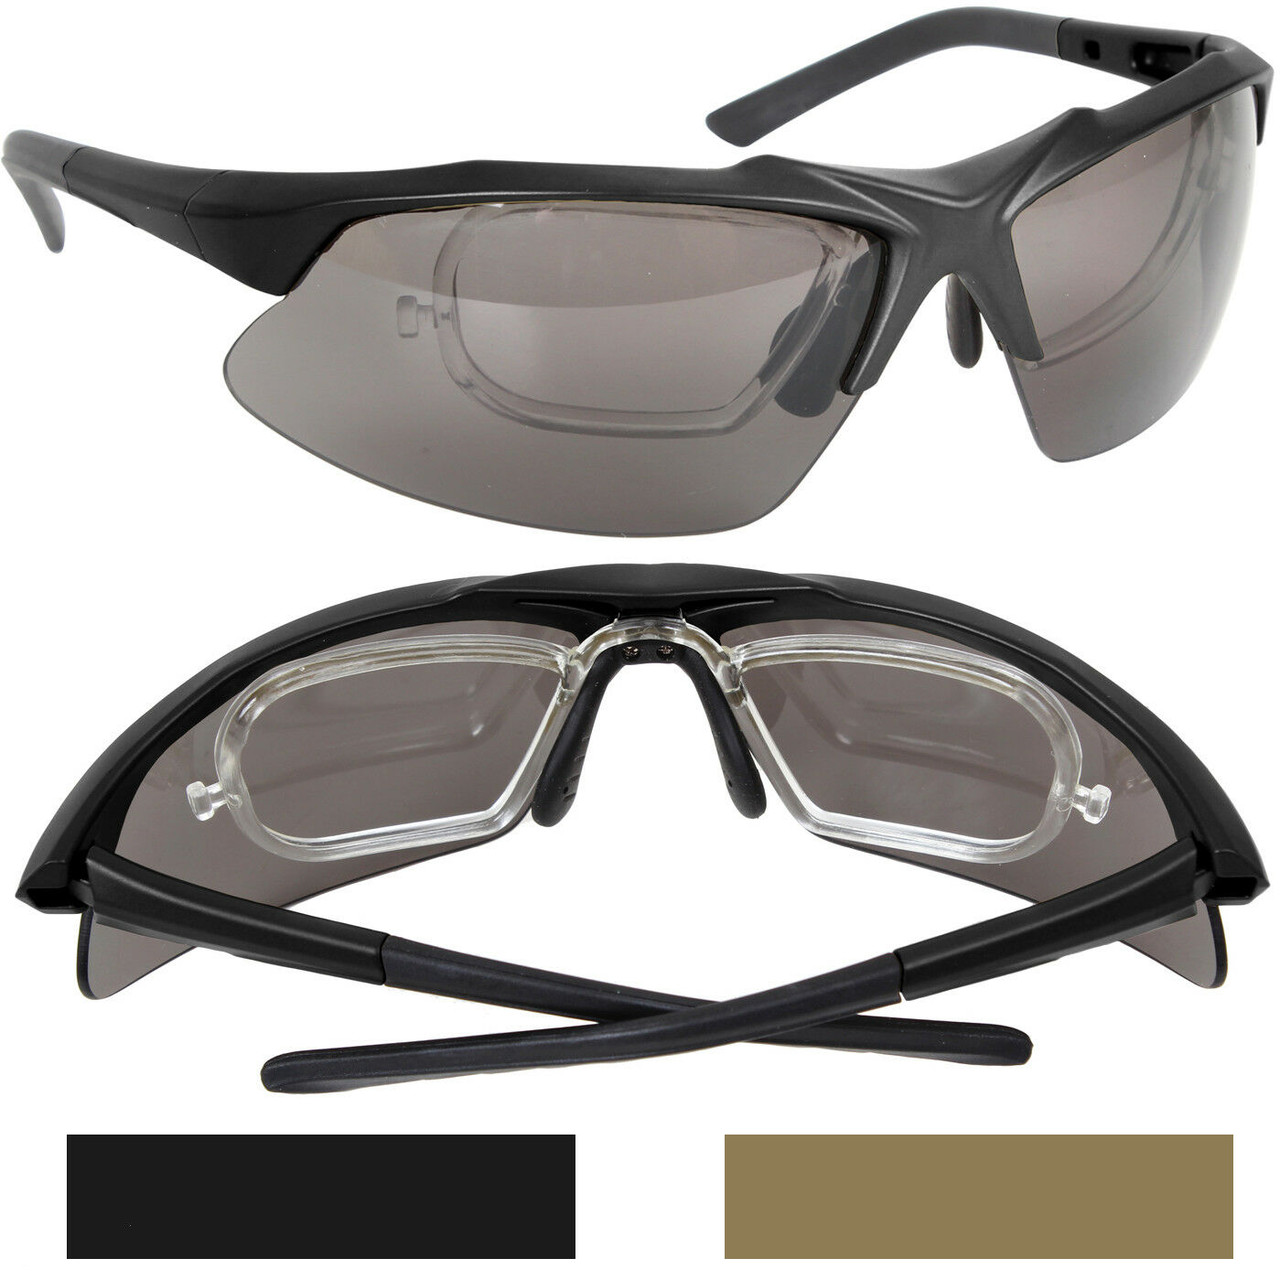 Rothco Black Tactical Eyewear Kit